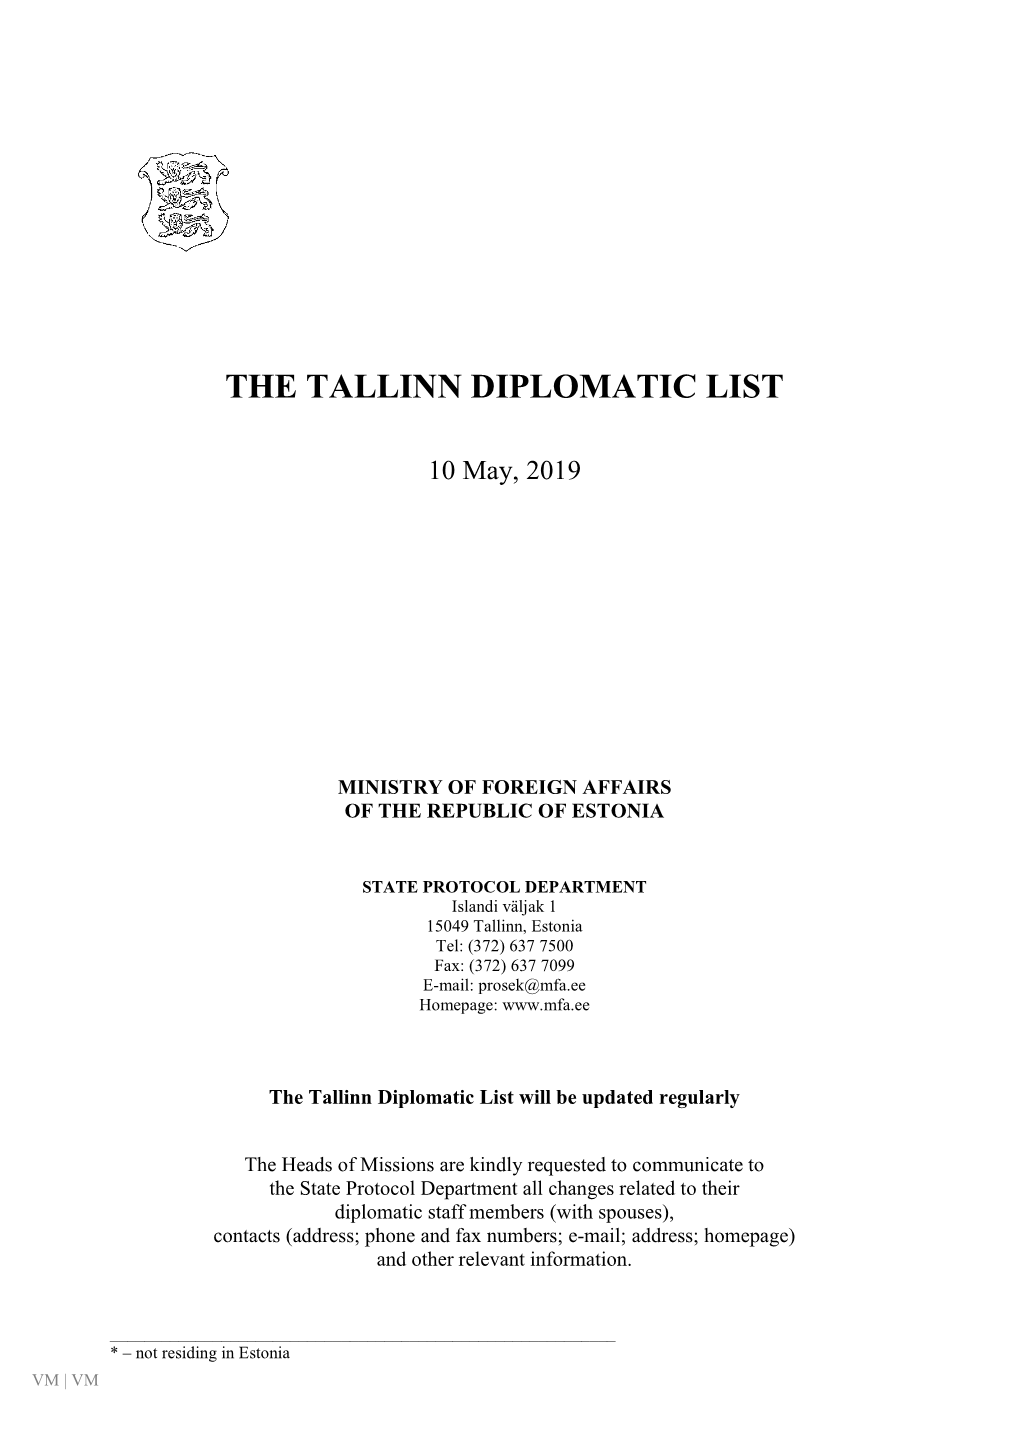 The Tallinn Diplomatic List